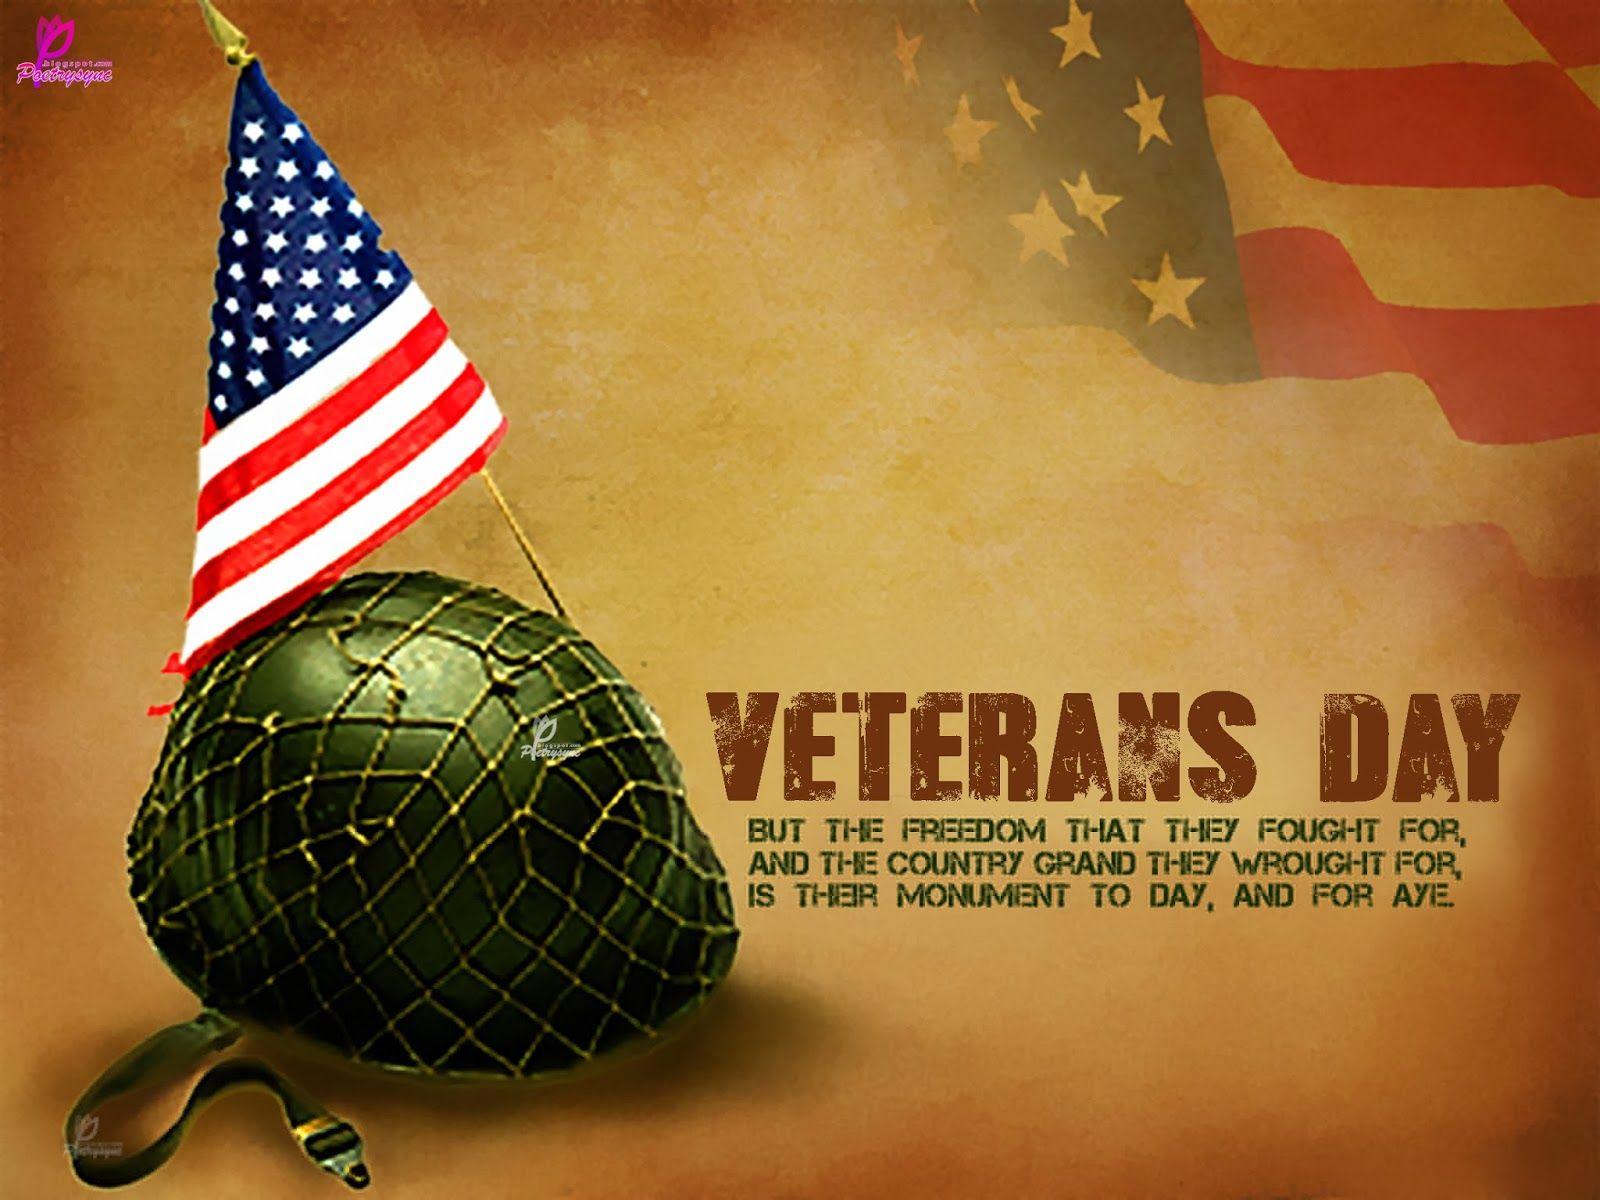 Veterans Day Wallpaper for iPhone